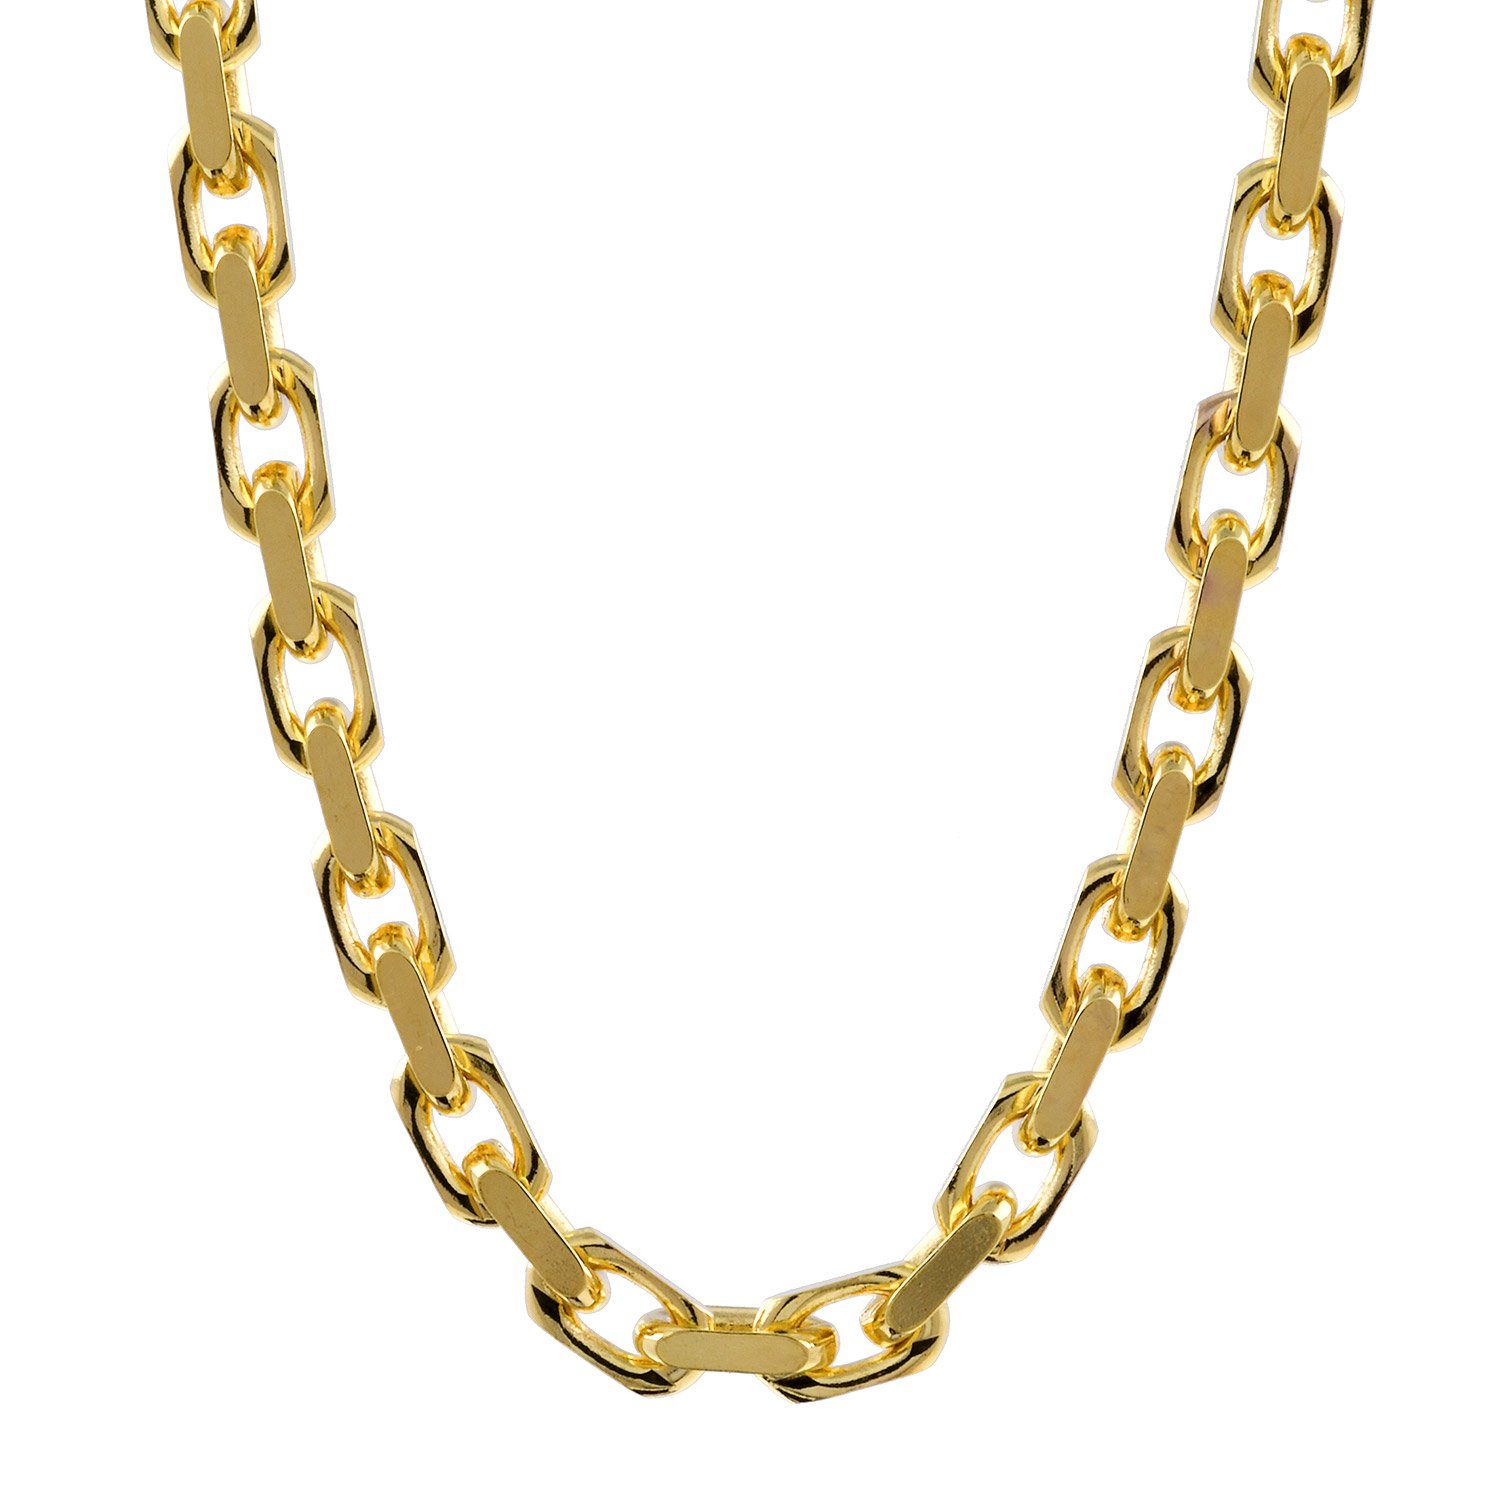 HOPLO Goldarmband Ankerkette diamantiert Länge 18,5cm - Breite 1,8mm - 333-8 Karat Gold